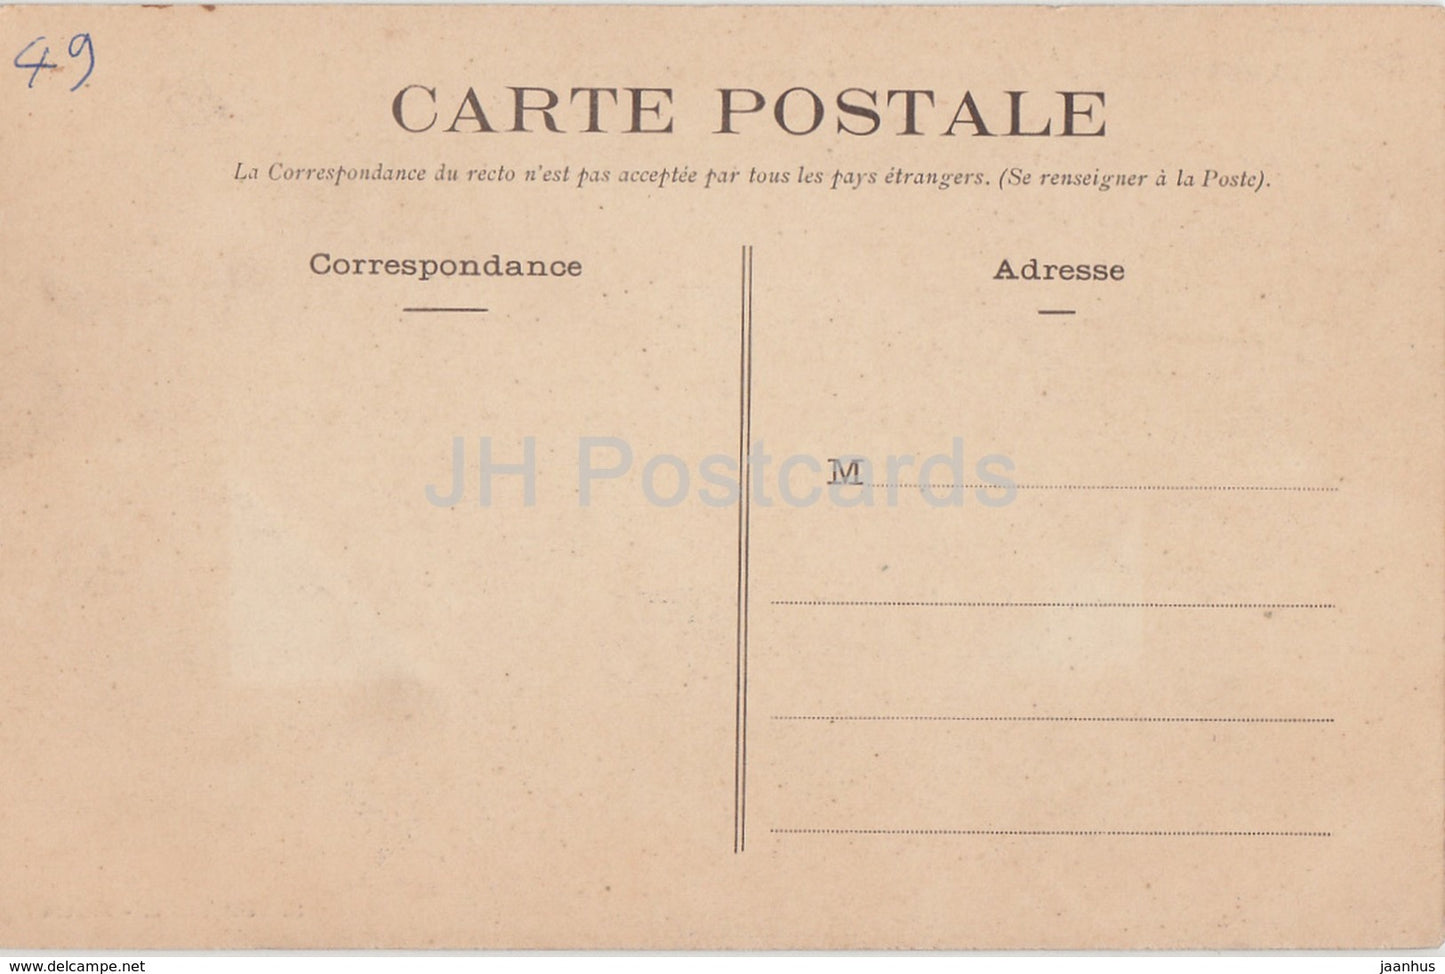 Ecuille - Plessis Bourre - Facade principale - castle - old postcard - France - unused